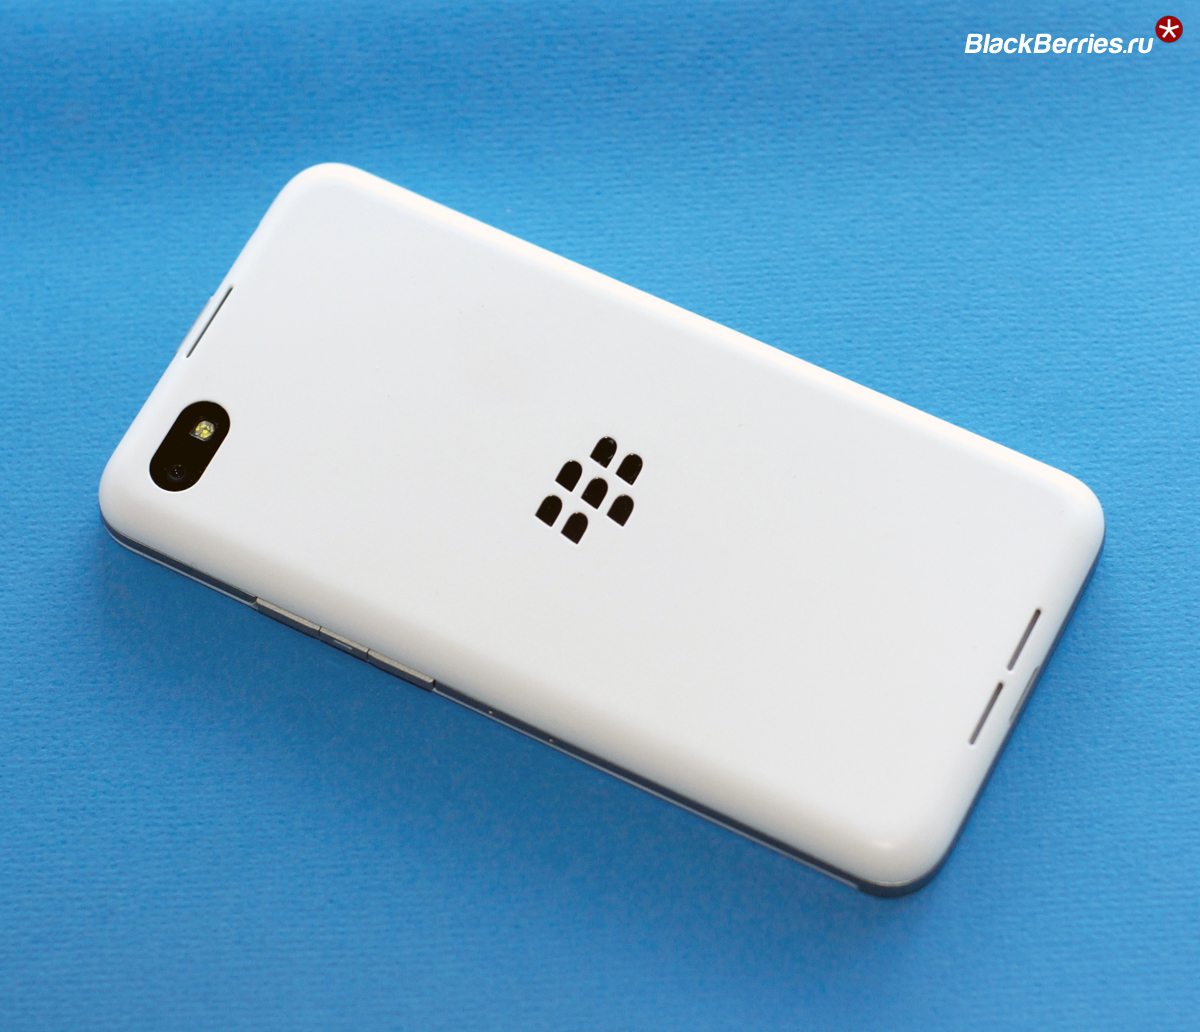 BlackBerry-Z30-White-1